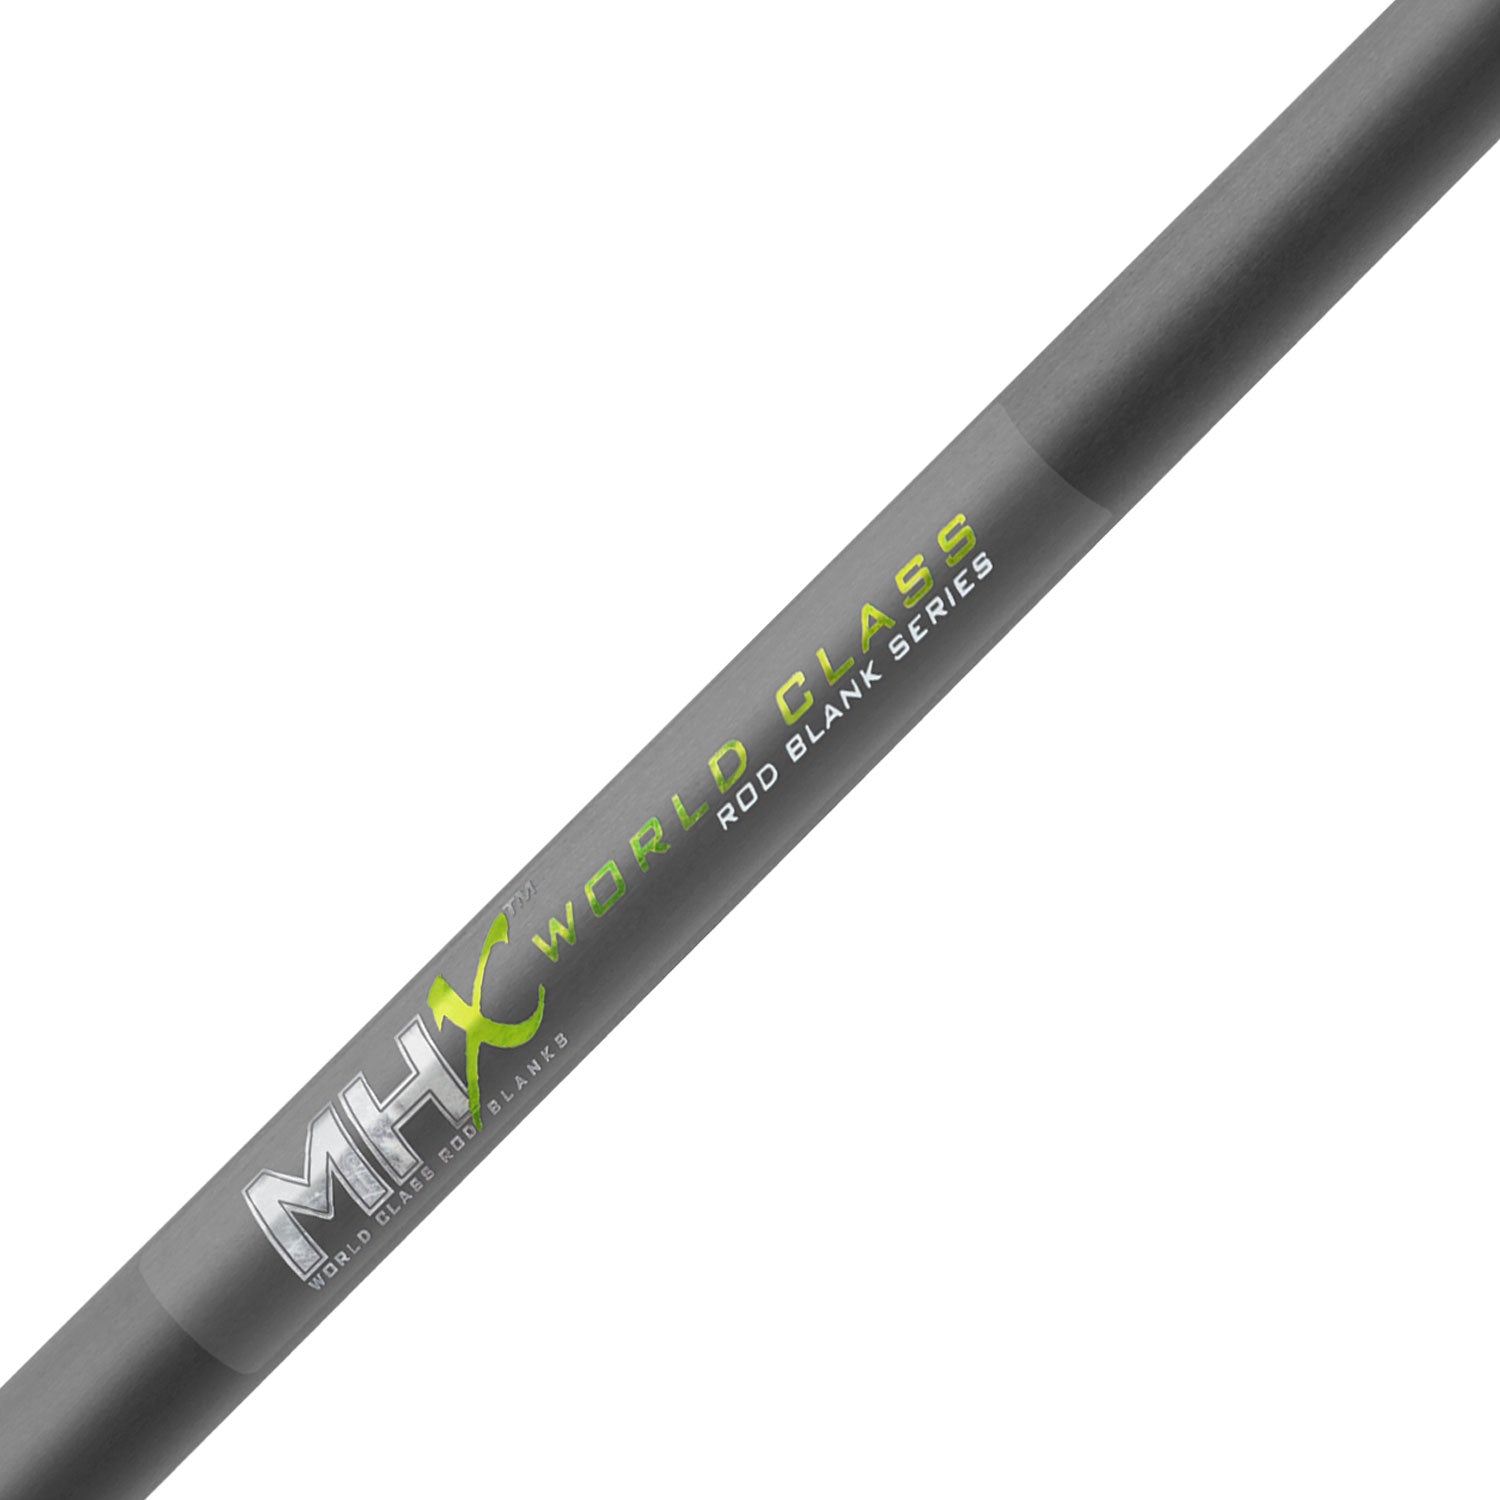 MHX 6'6" Medium Popping Rod Blank - P783-MHX